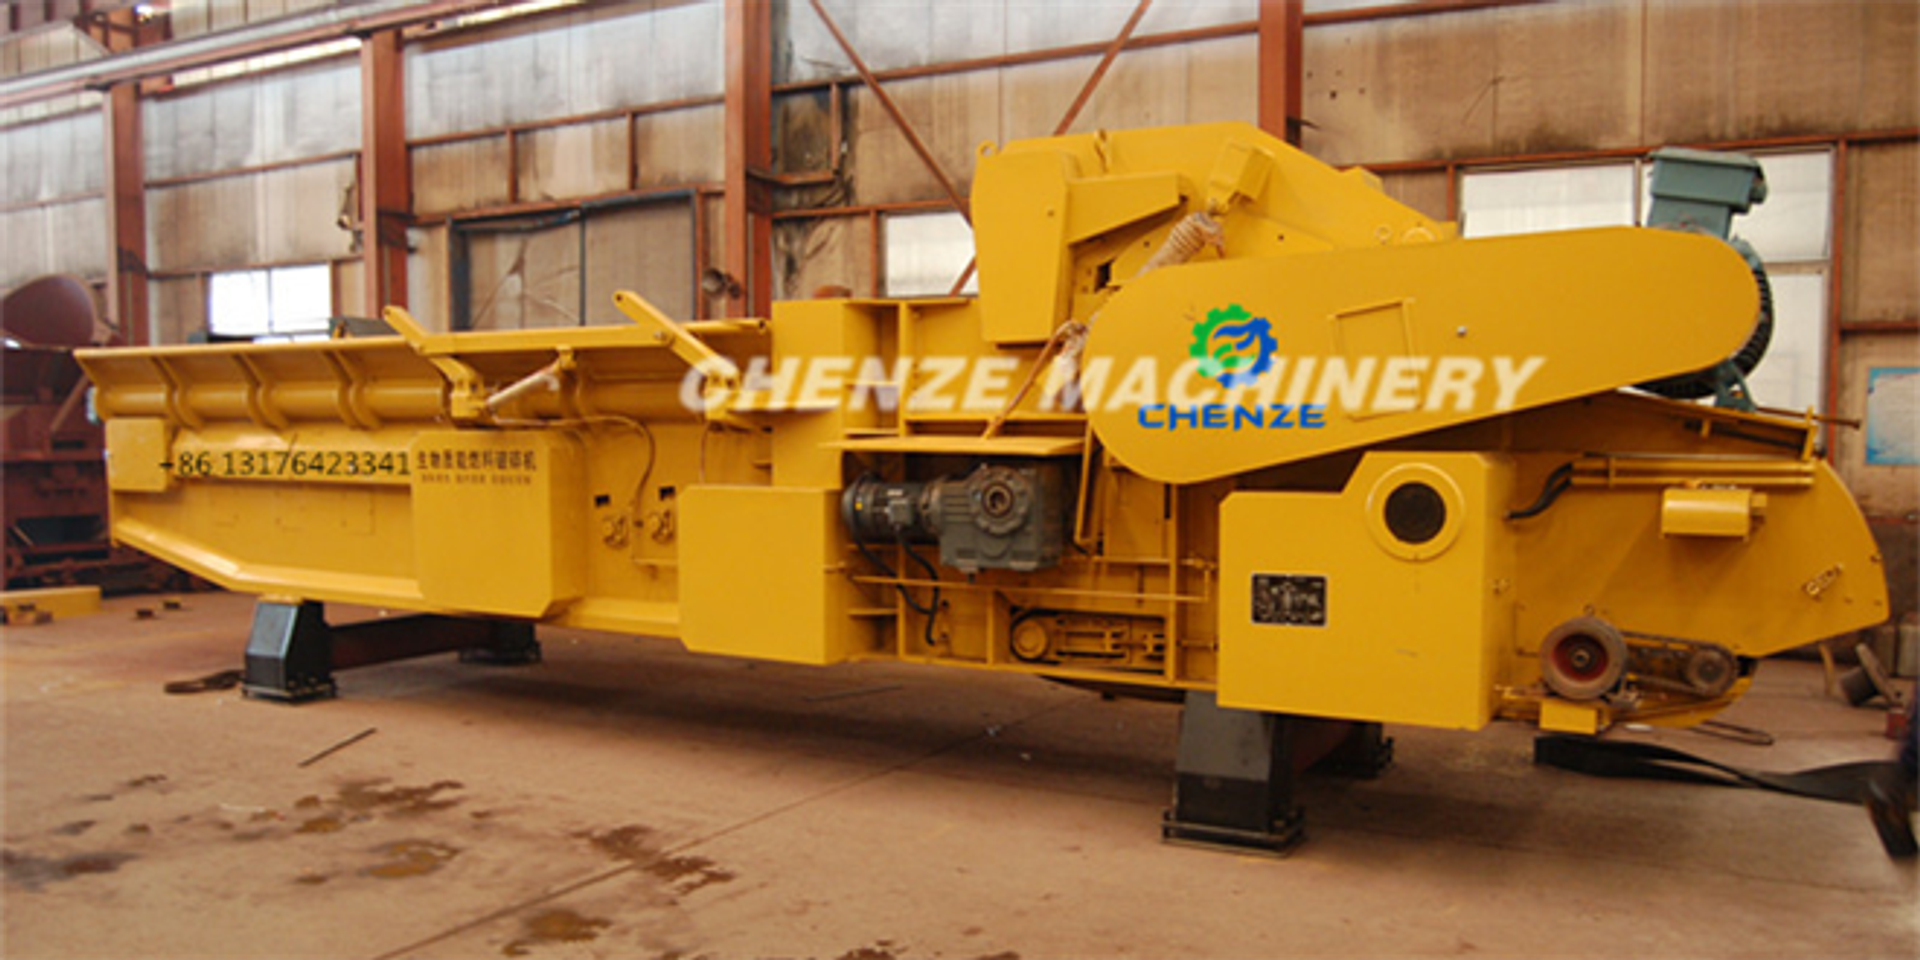 Zibo Chenze Machinery Co., Ltd.